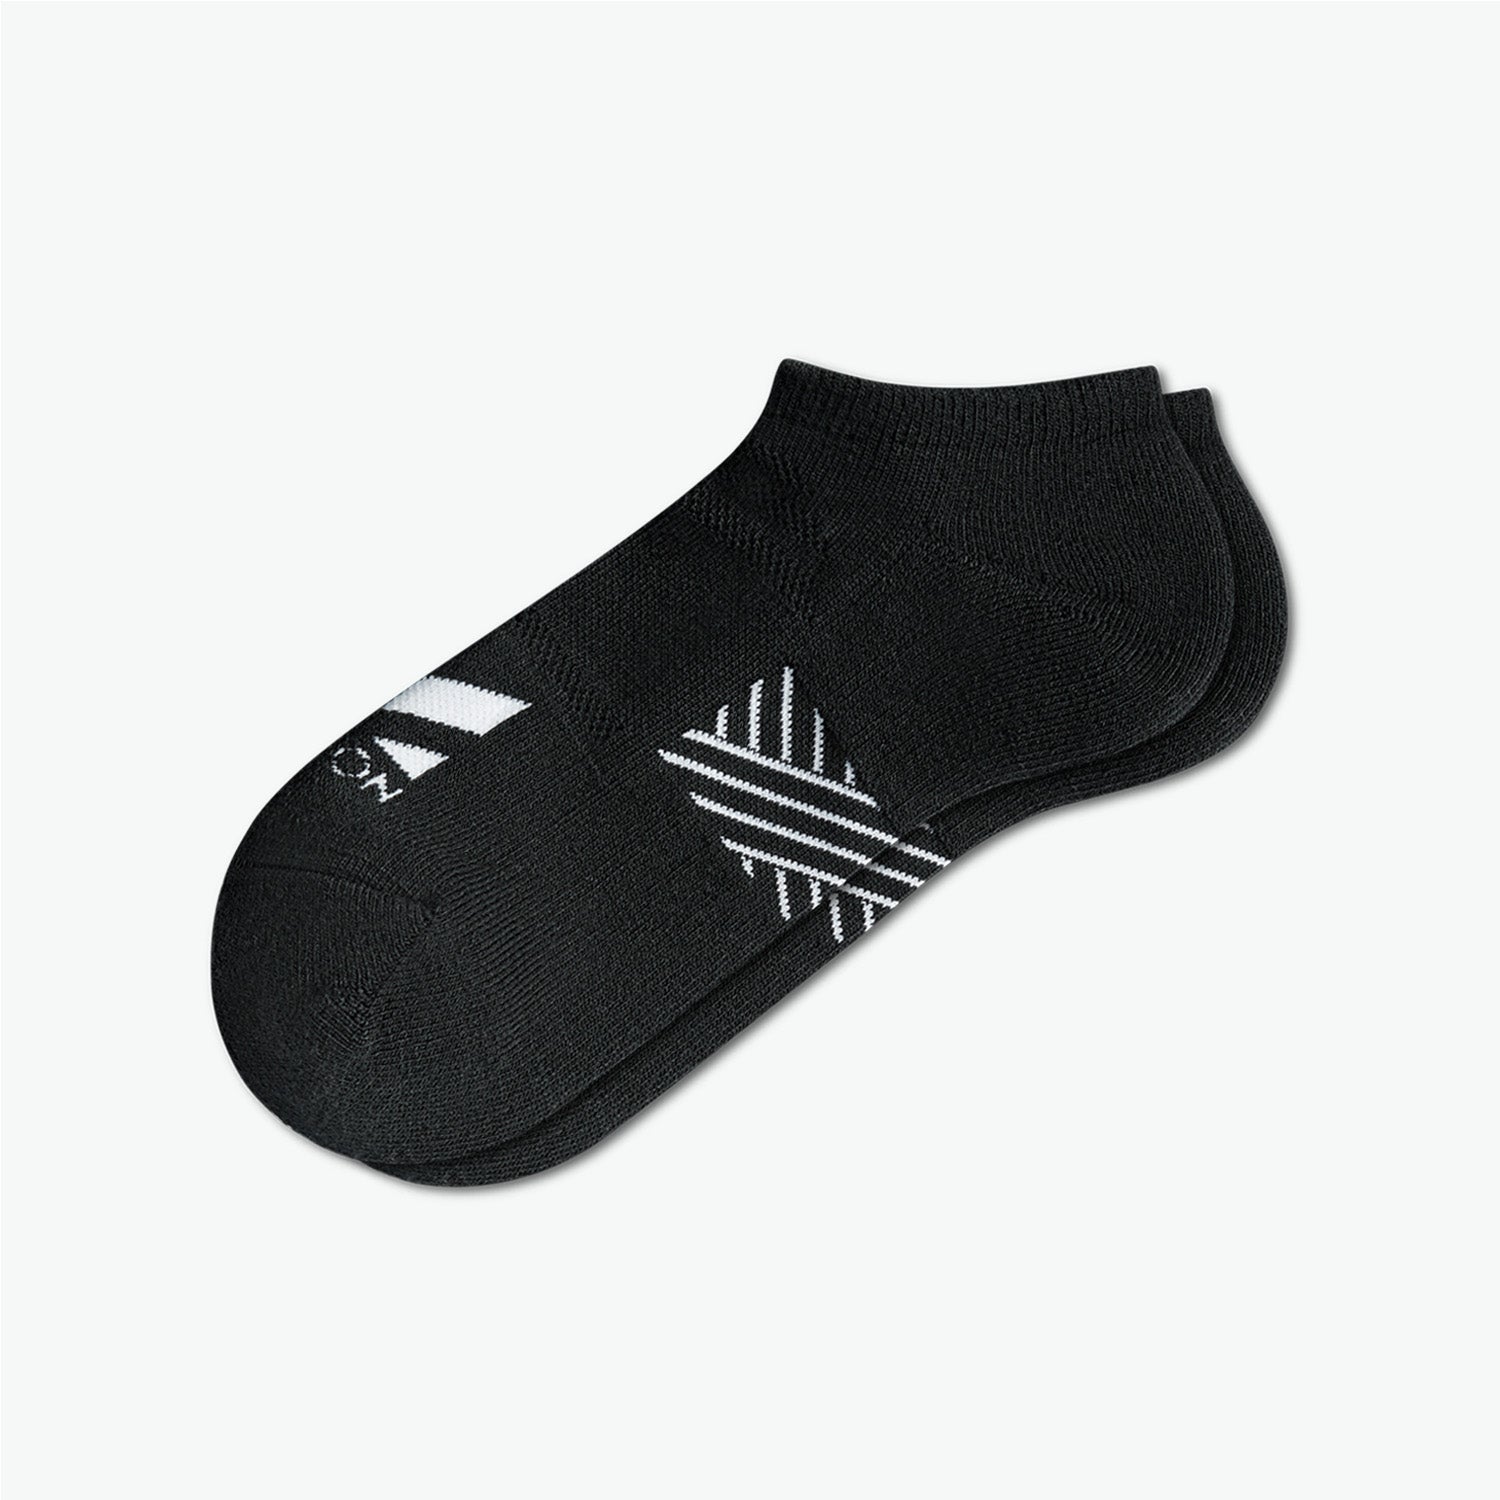 Pinnacle Dry Comfort Low-Cut Socks Socks MISSION M  (US 6-8) Black 